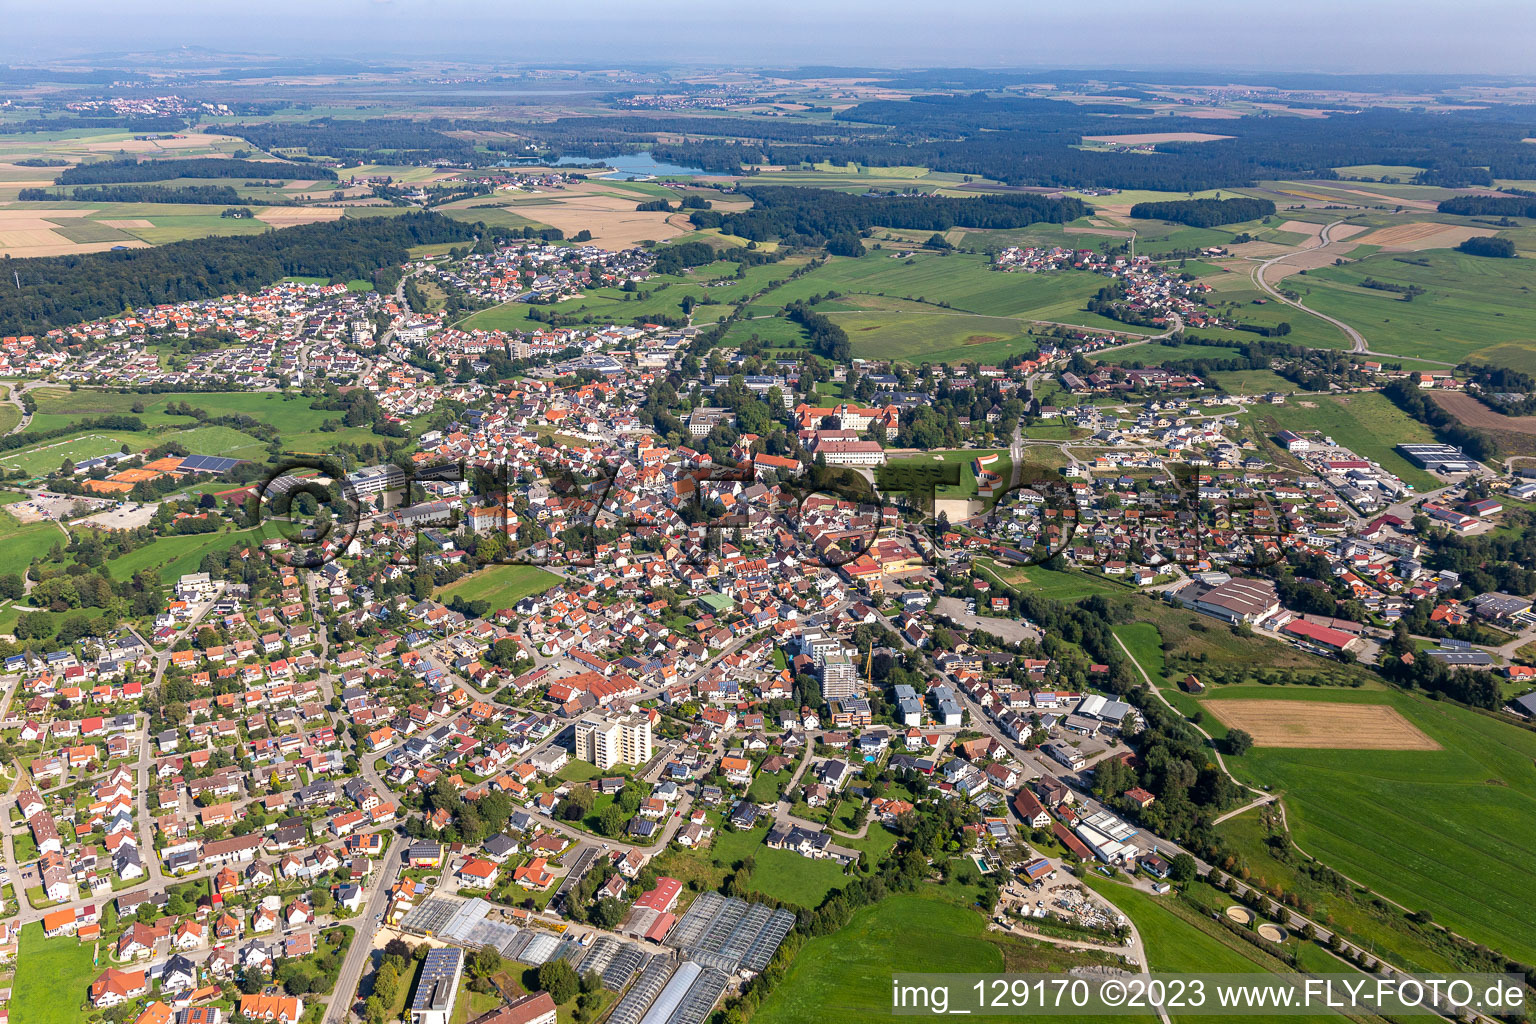 Vue aérienne de Quartier Zellerhof in Bad Schussenried dans le département Bade-Wurtemberg, Allemagne